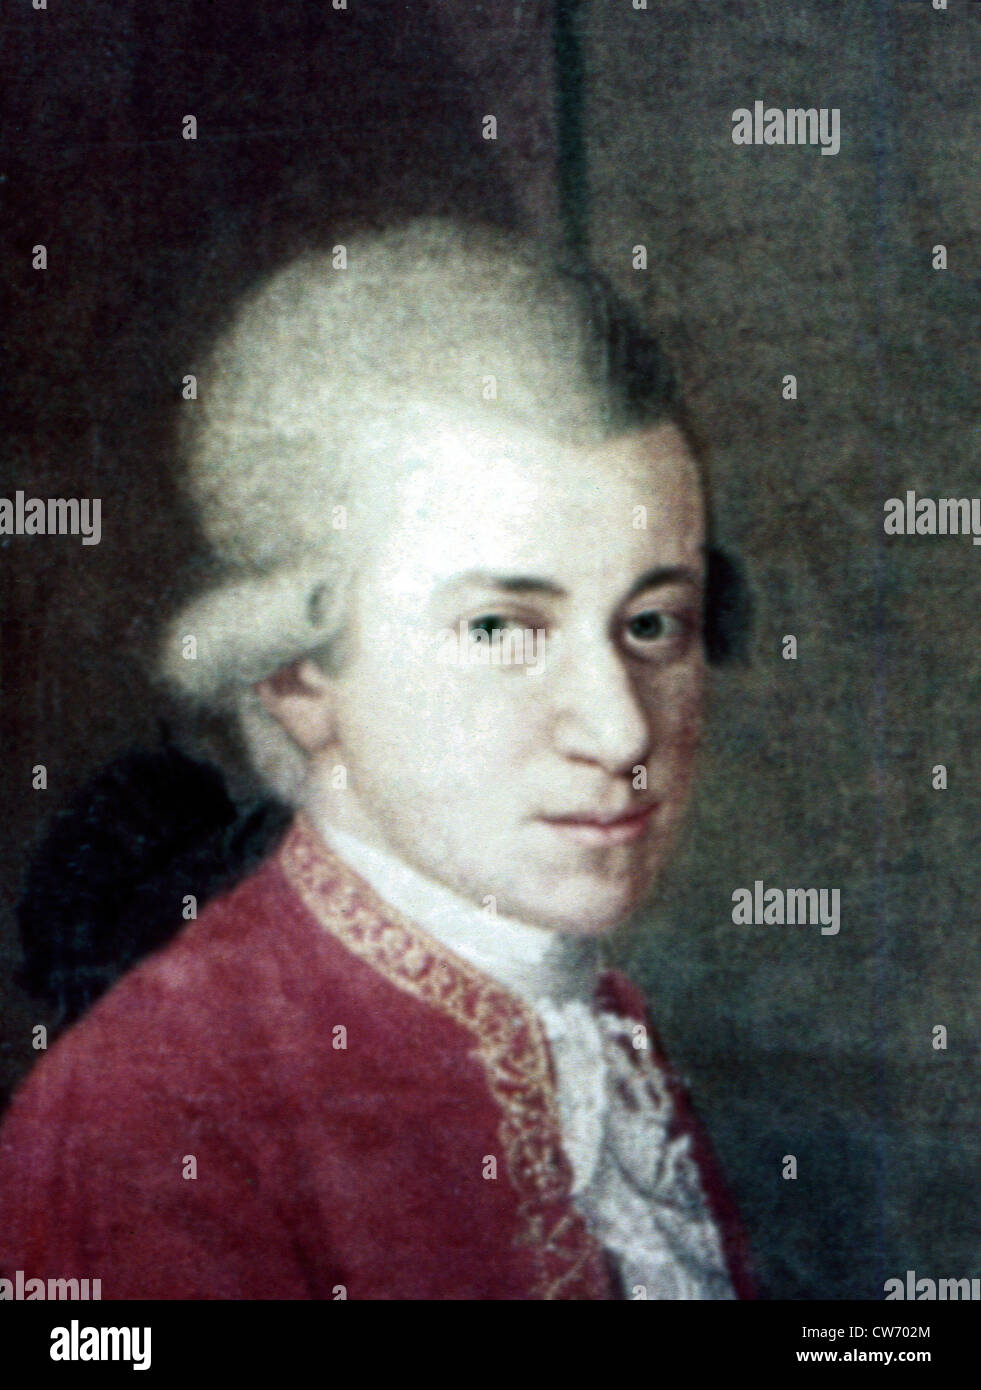 Mozart Stock Photo